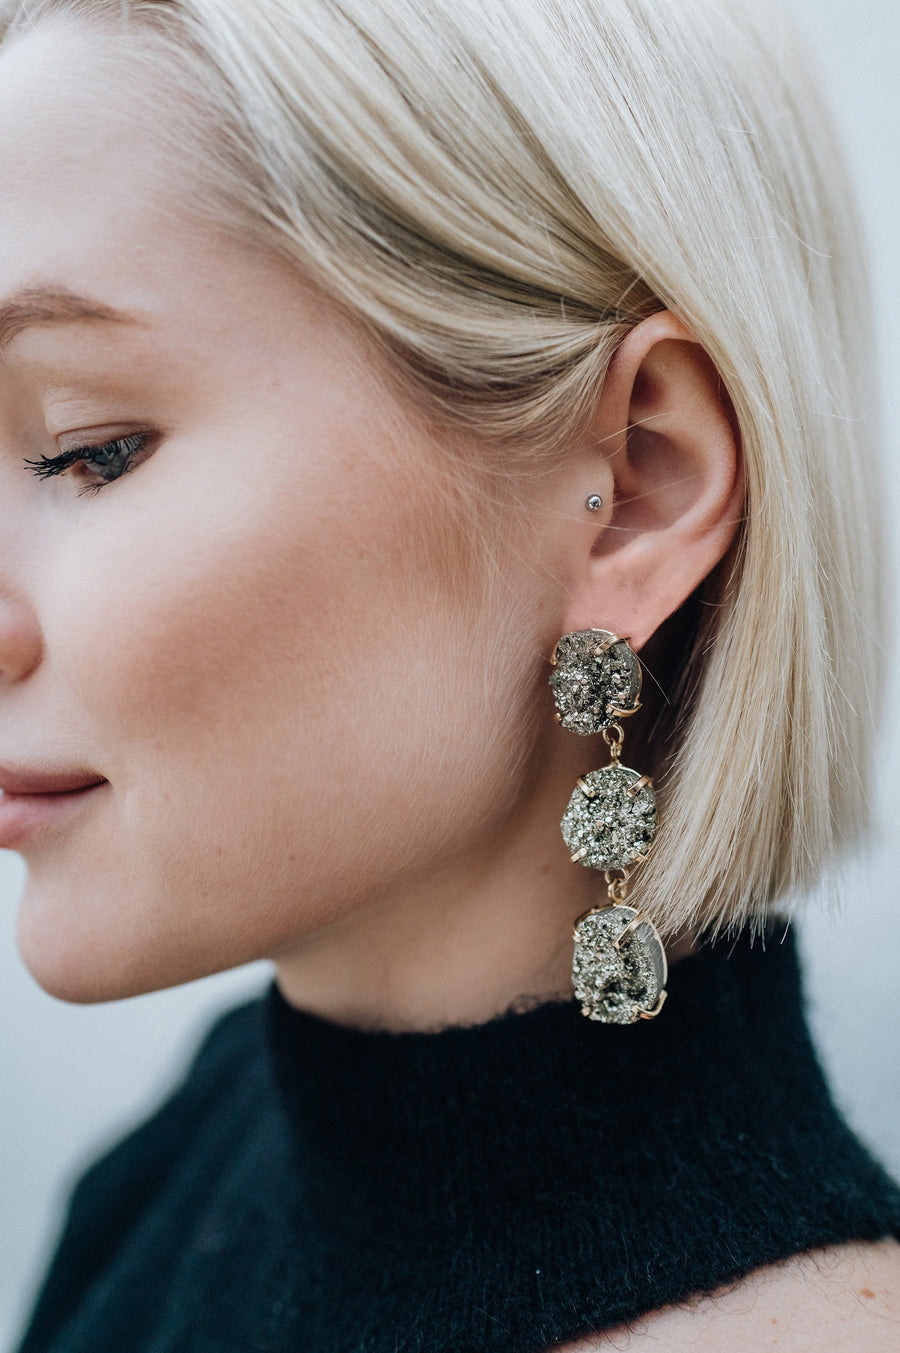 Pyrite triple earrings fashion gold plated